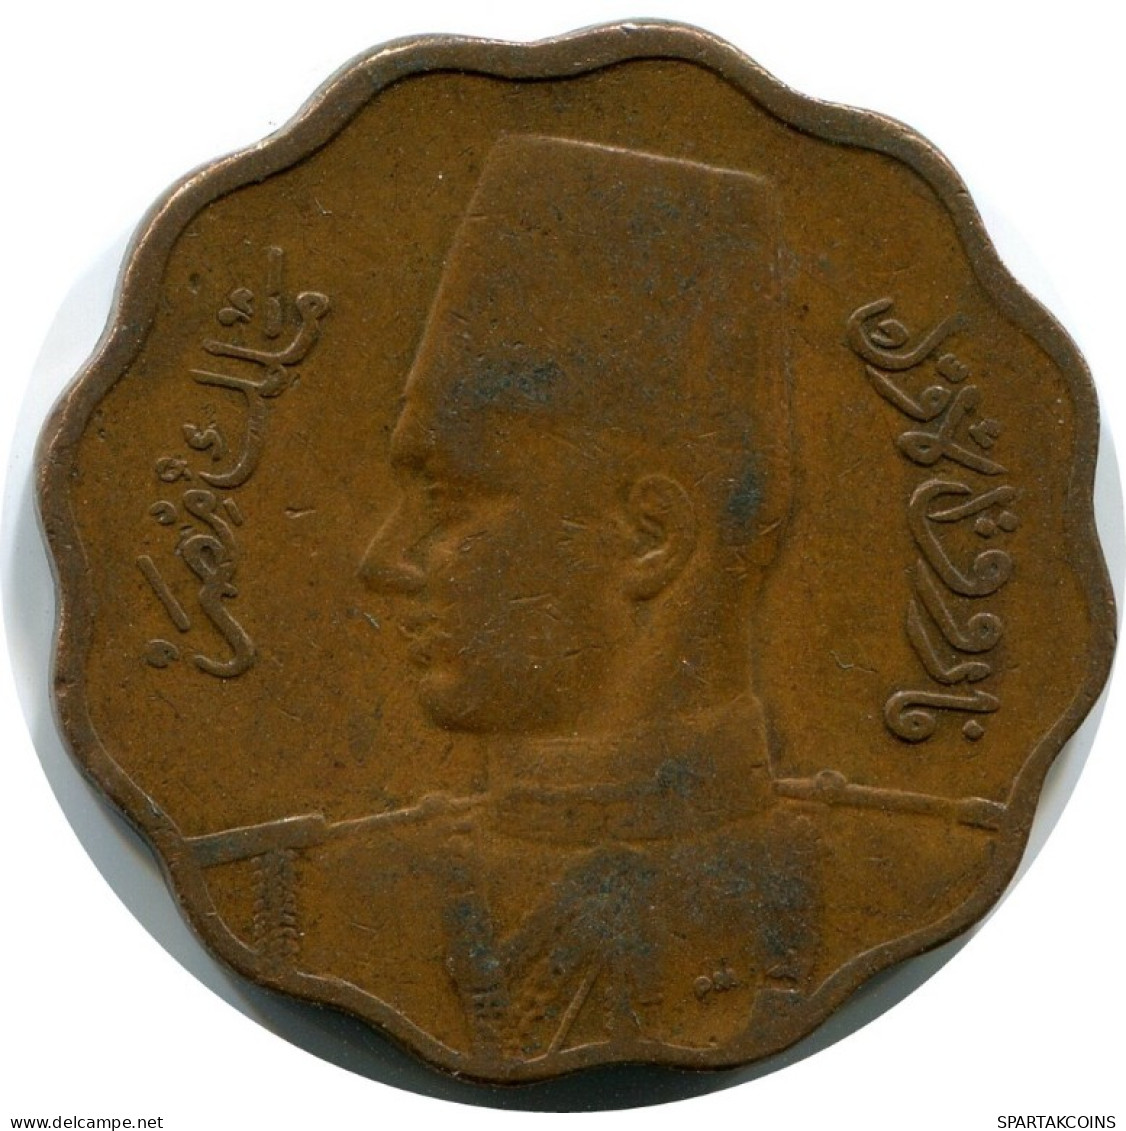 10 MILLIEMES 1943 ÄGYPTEN EGYPT Islamisch Münze #AK028.D.A - Egypt